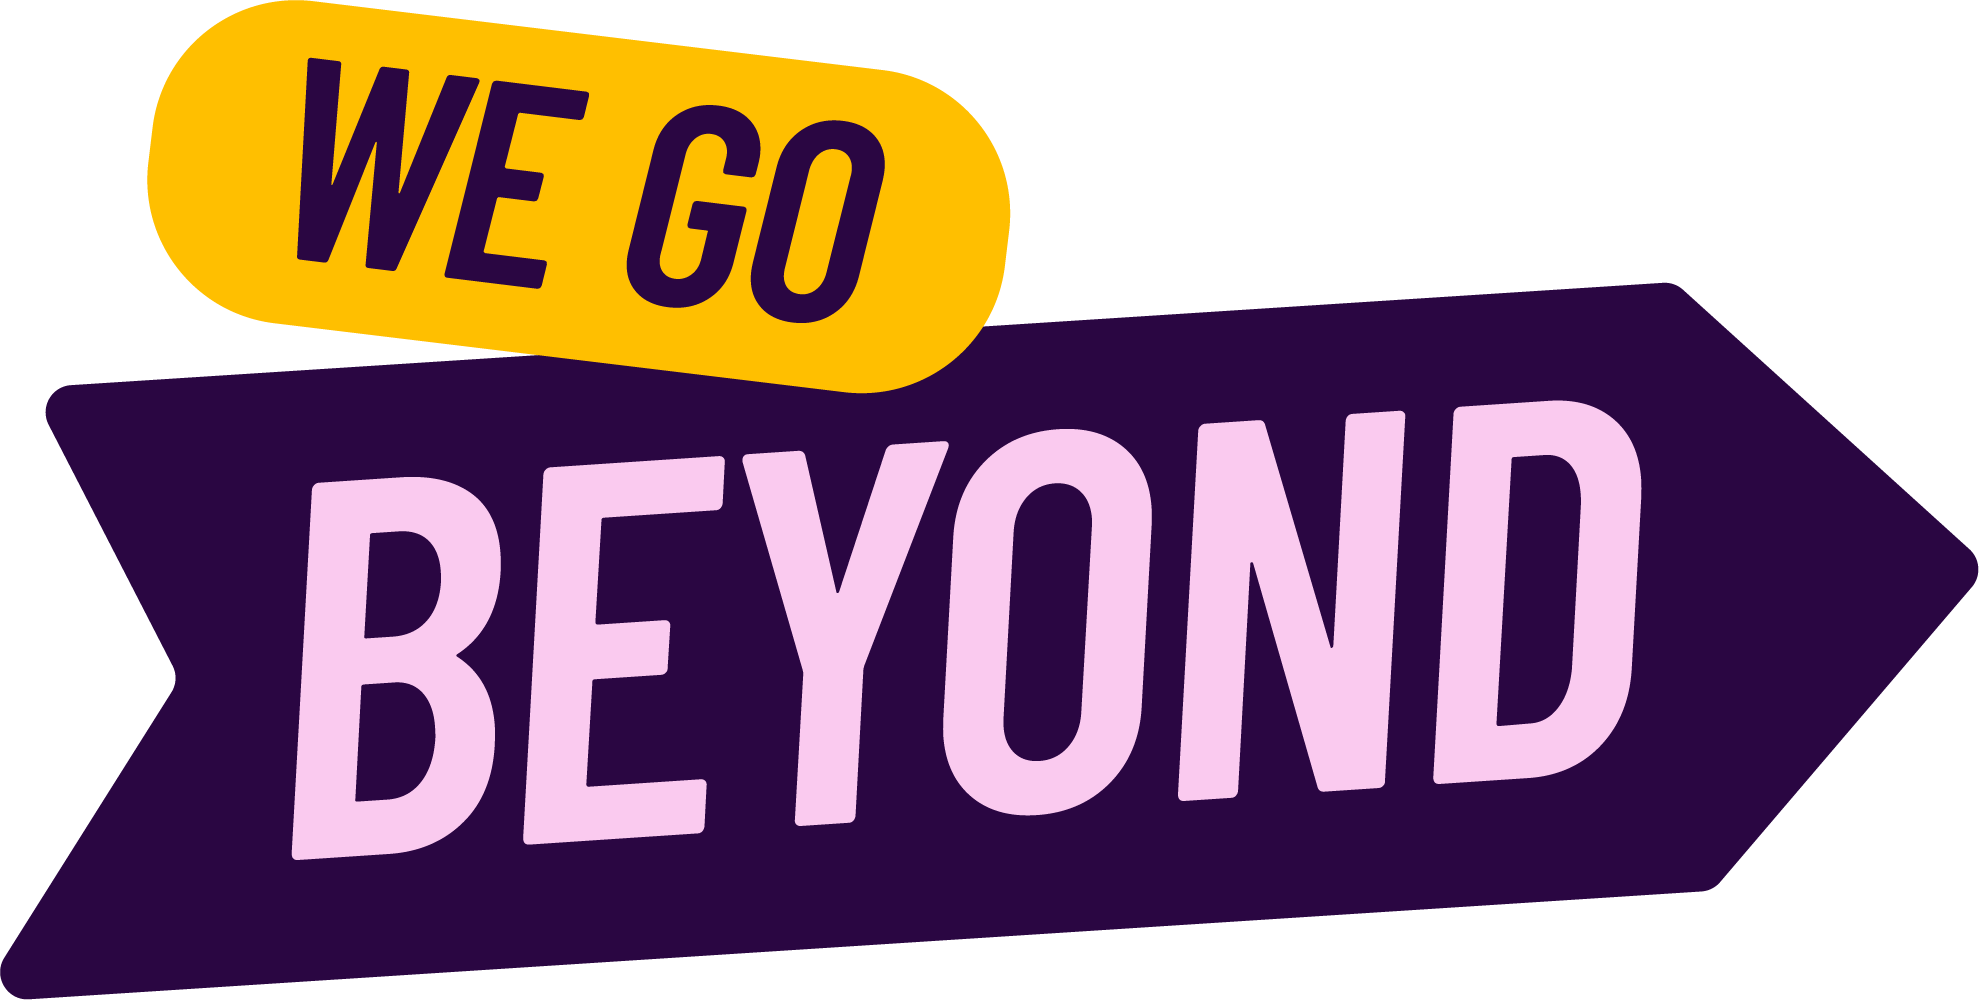 We-Go-Beyond-Logo_Yellow-Purple